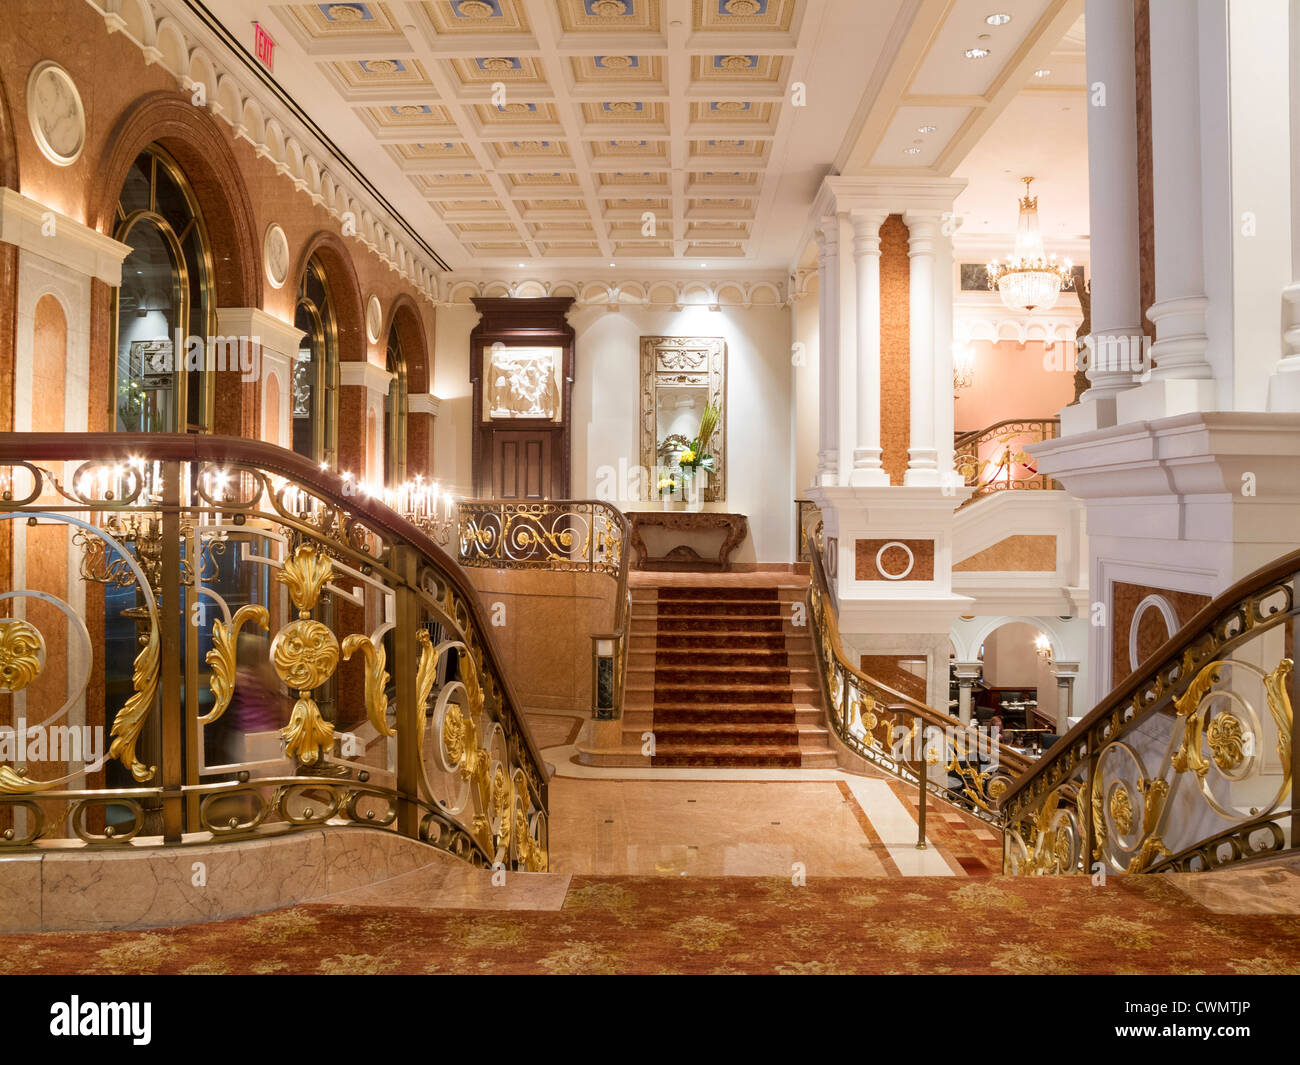 The Lotte New York Palace Hotel, Madison Avenue, NYC Stock Photo, Royalty Free Image: 50245518 ...